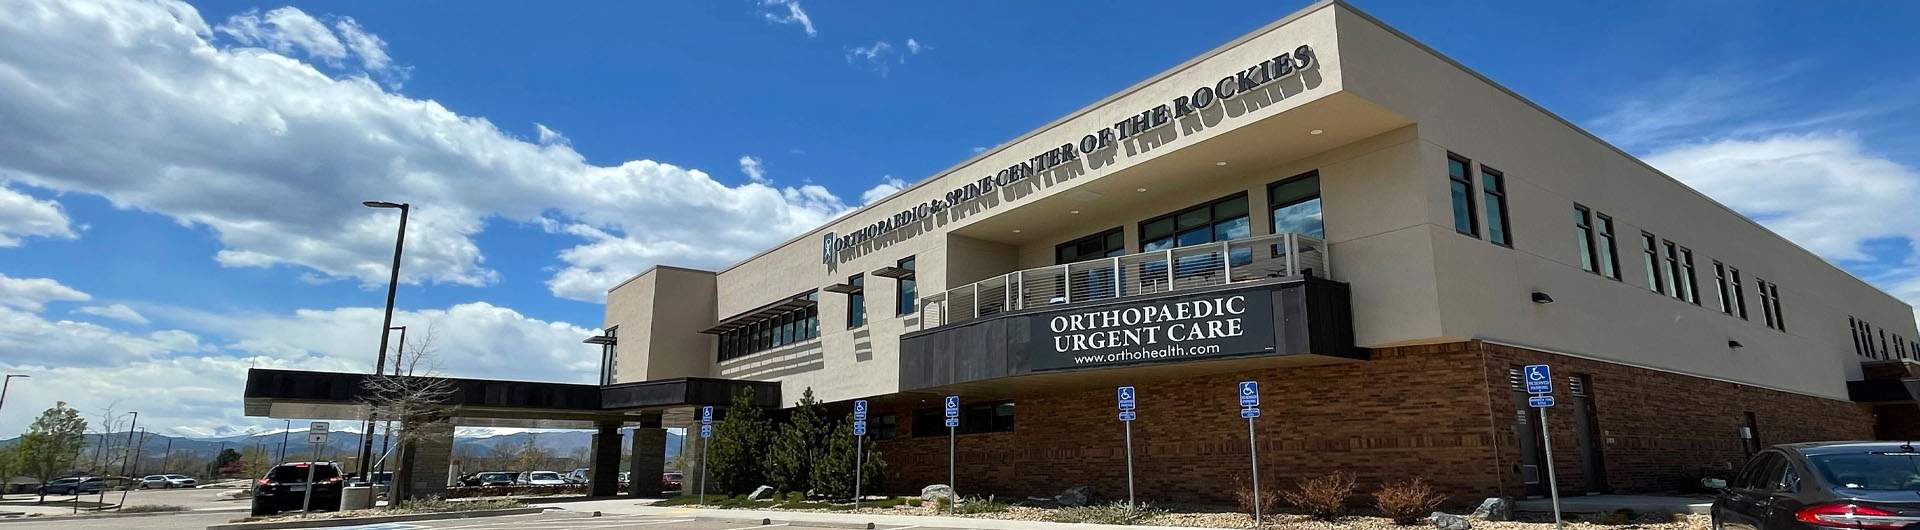 Longmont Orthopaedic & Spine Center of the Rockies